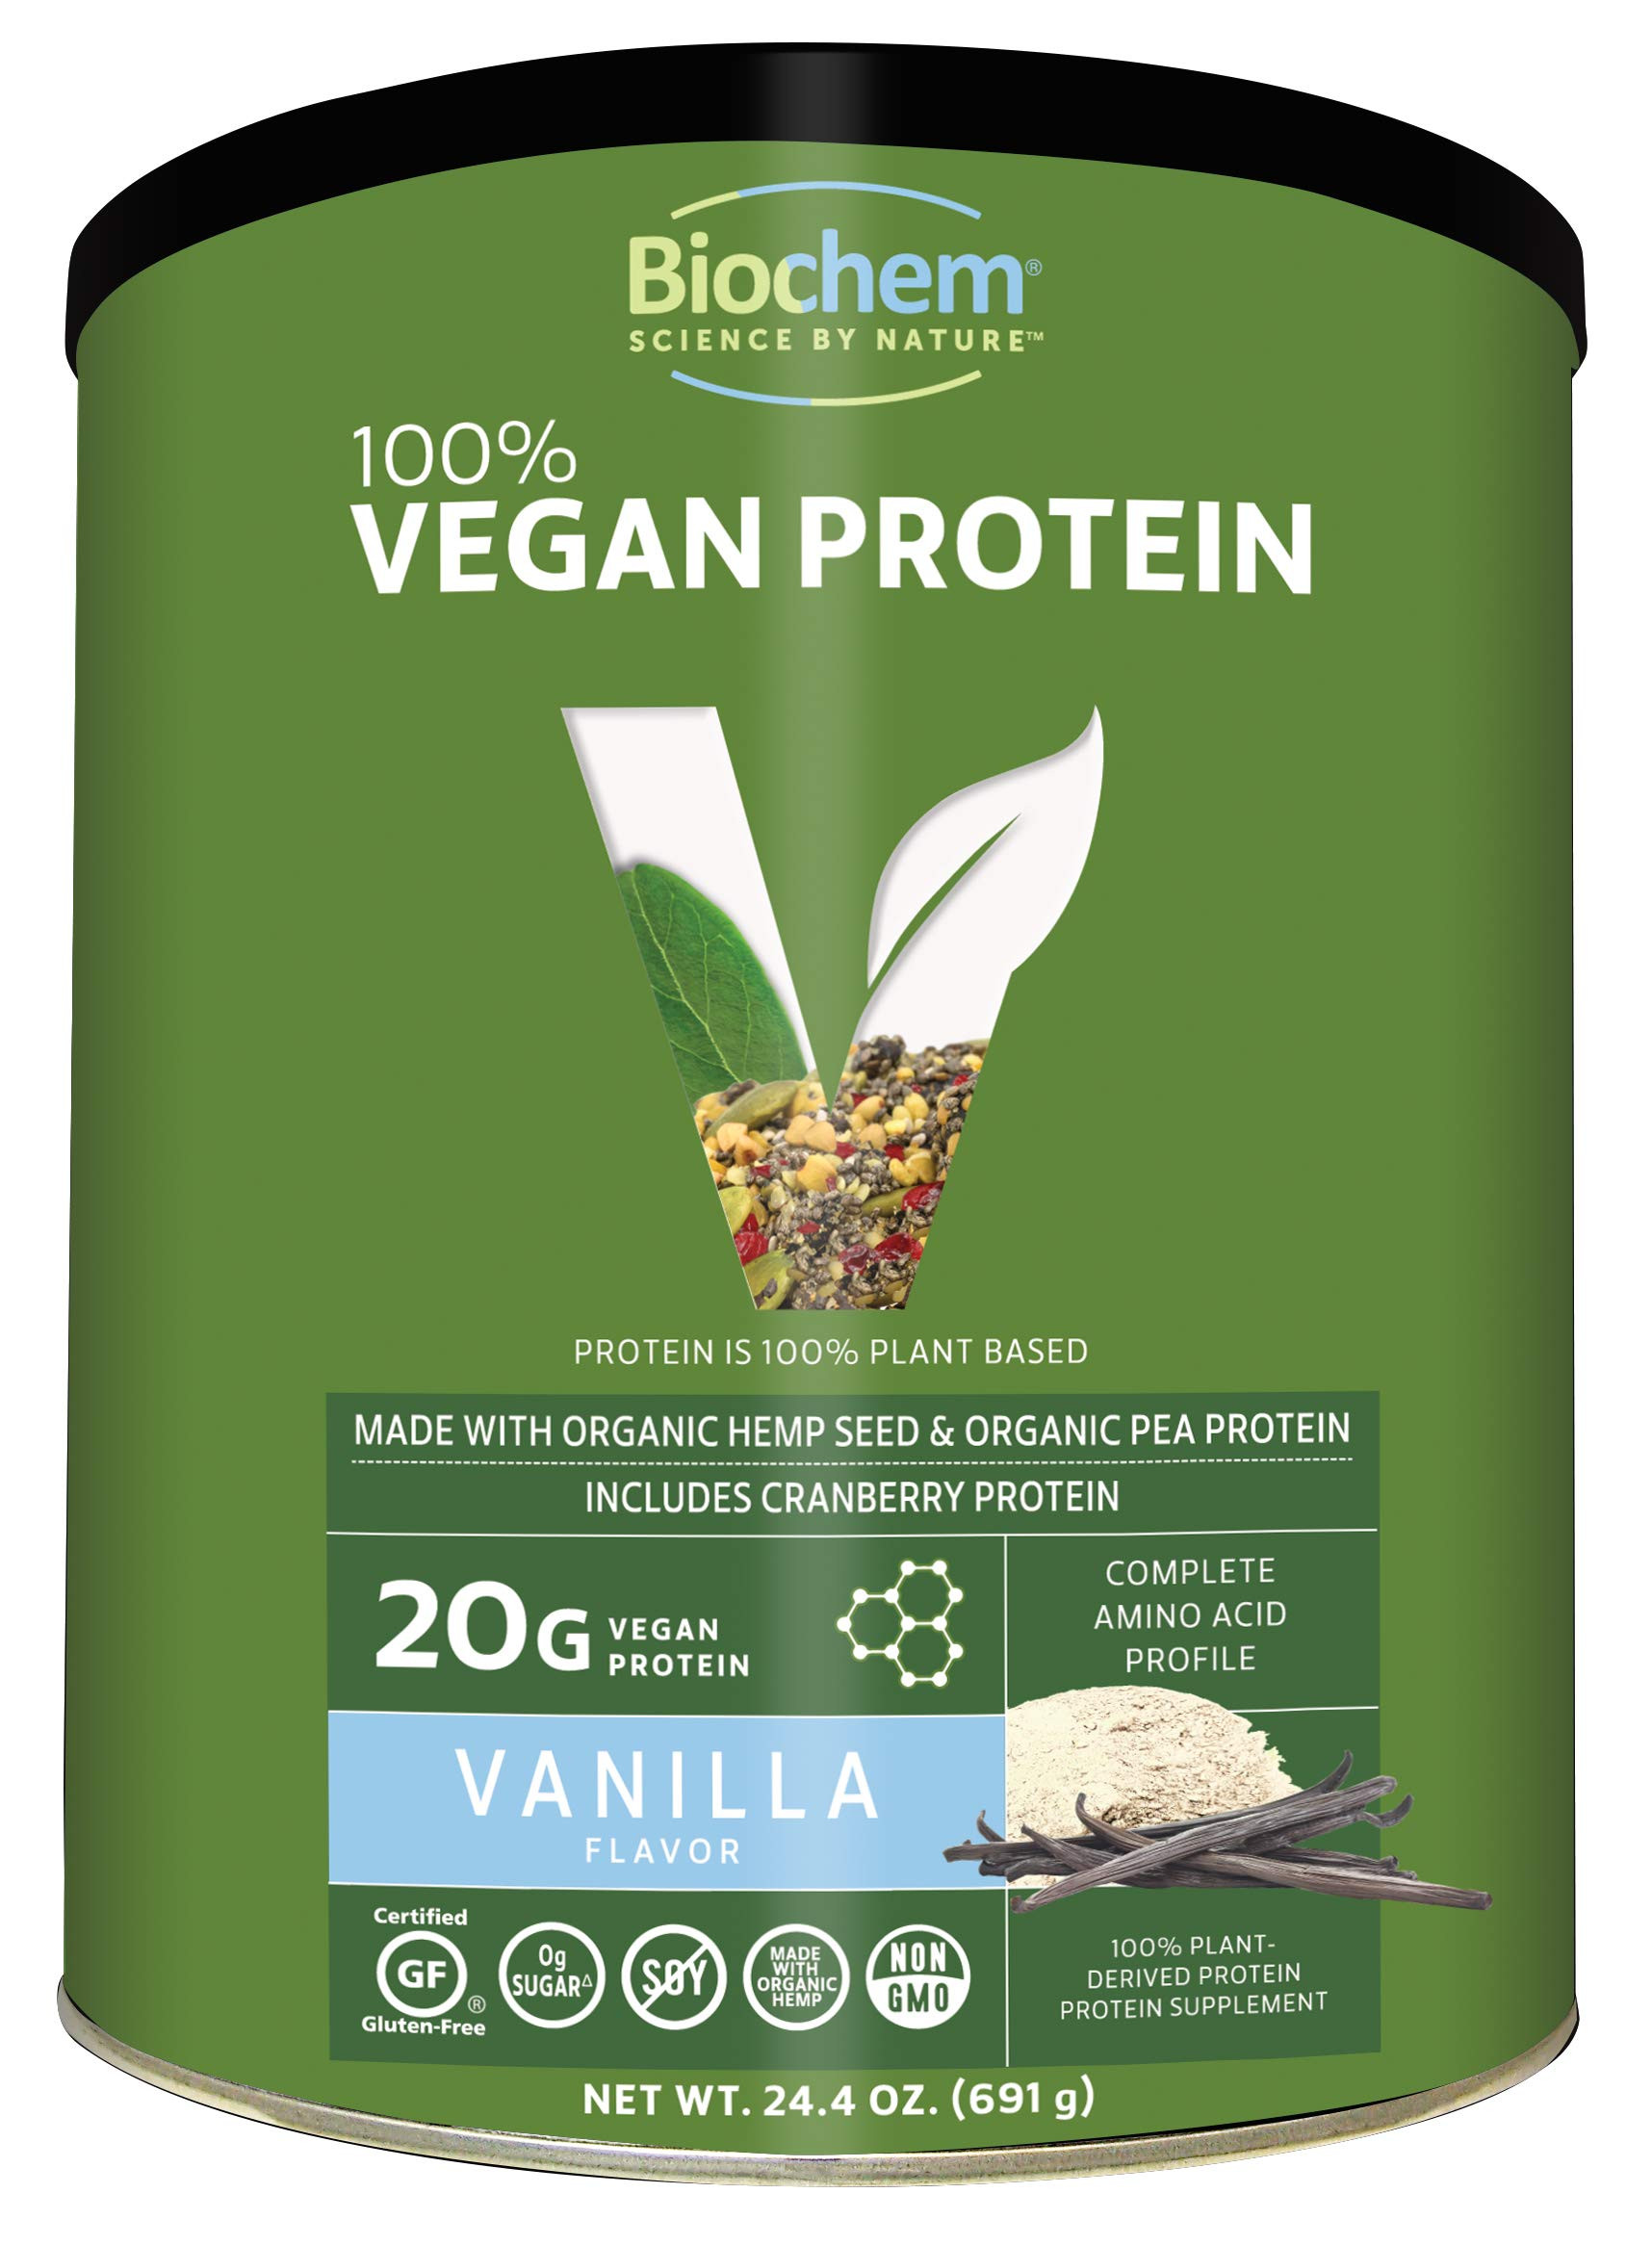 Whole Foods Vegetarian Protein Powder
 Amazon Biochem Vegan Protein Powder Mix 26 oz